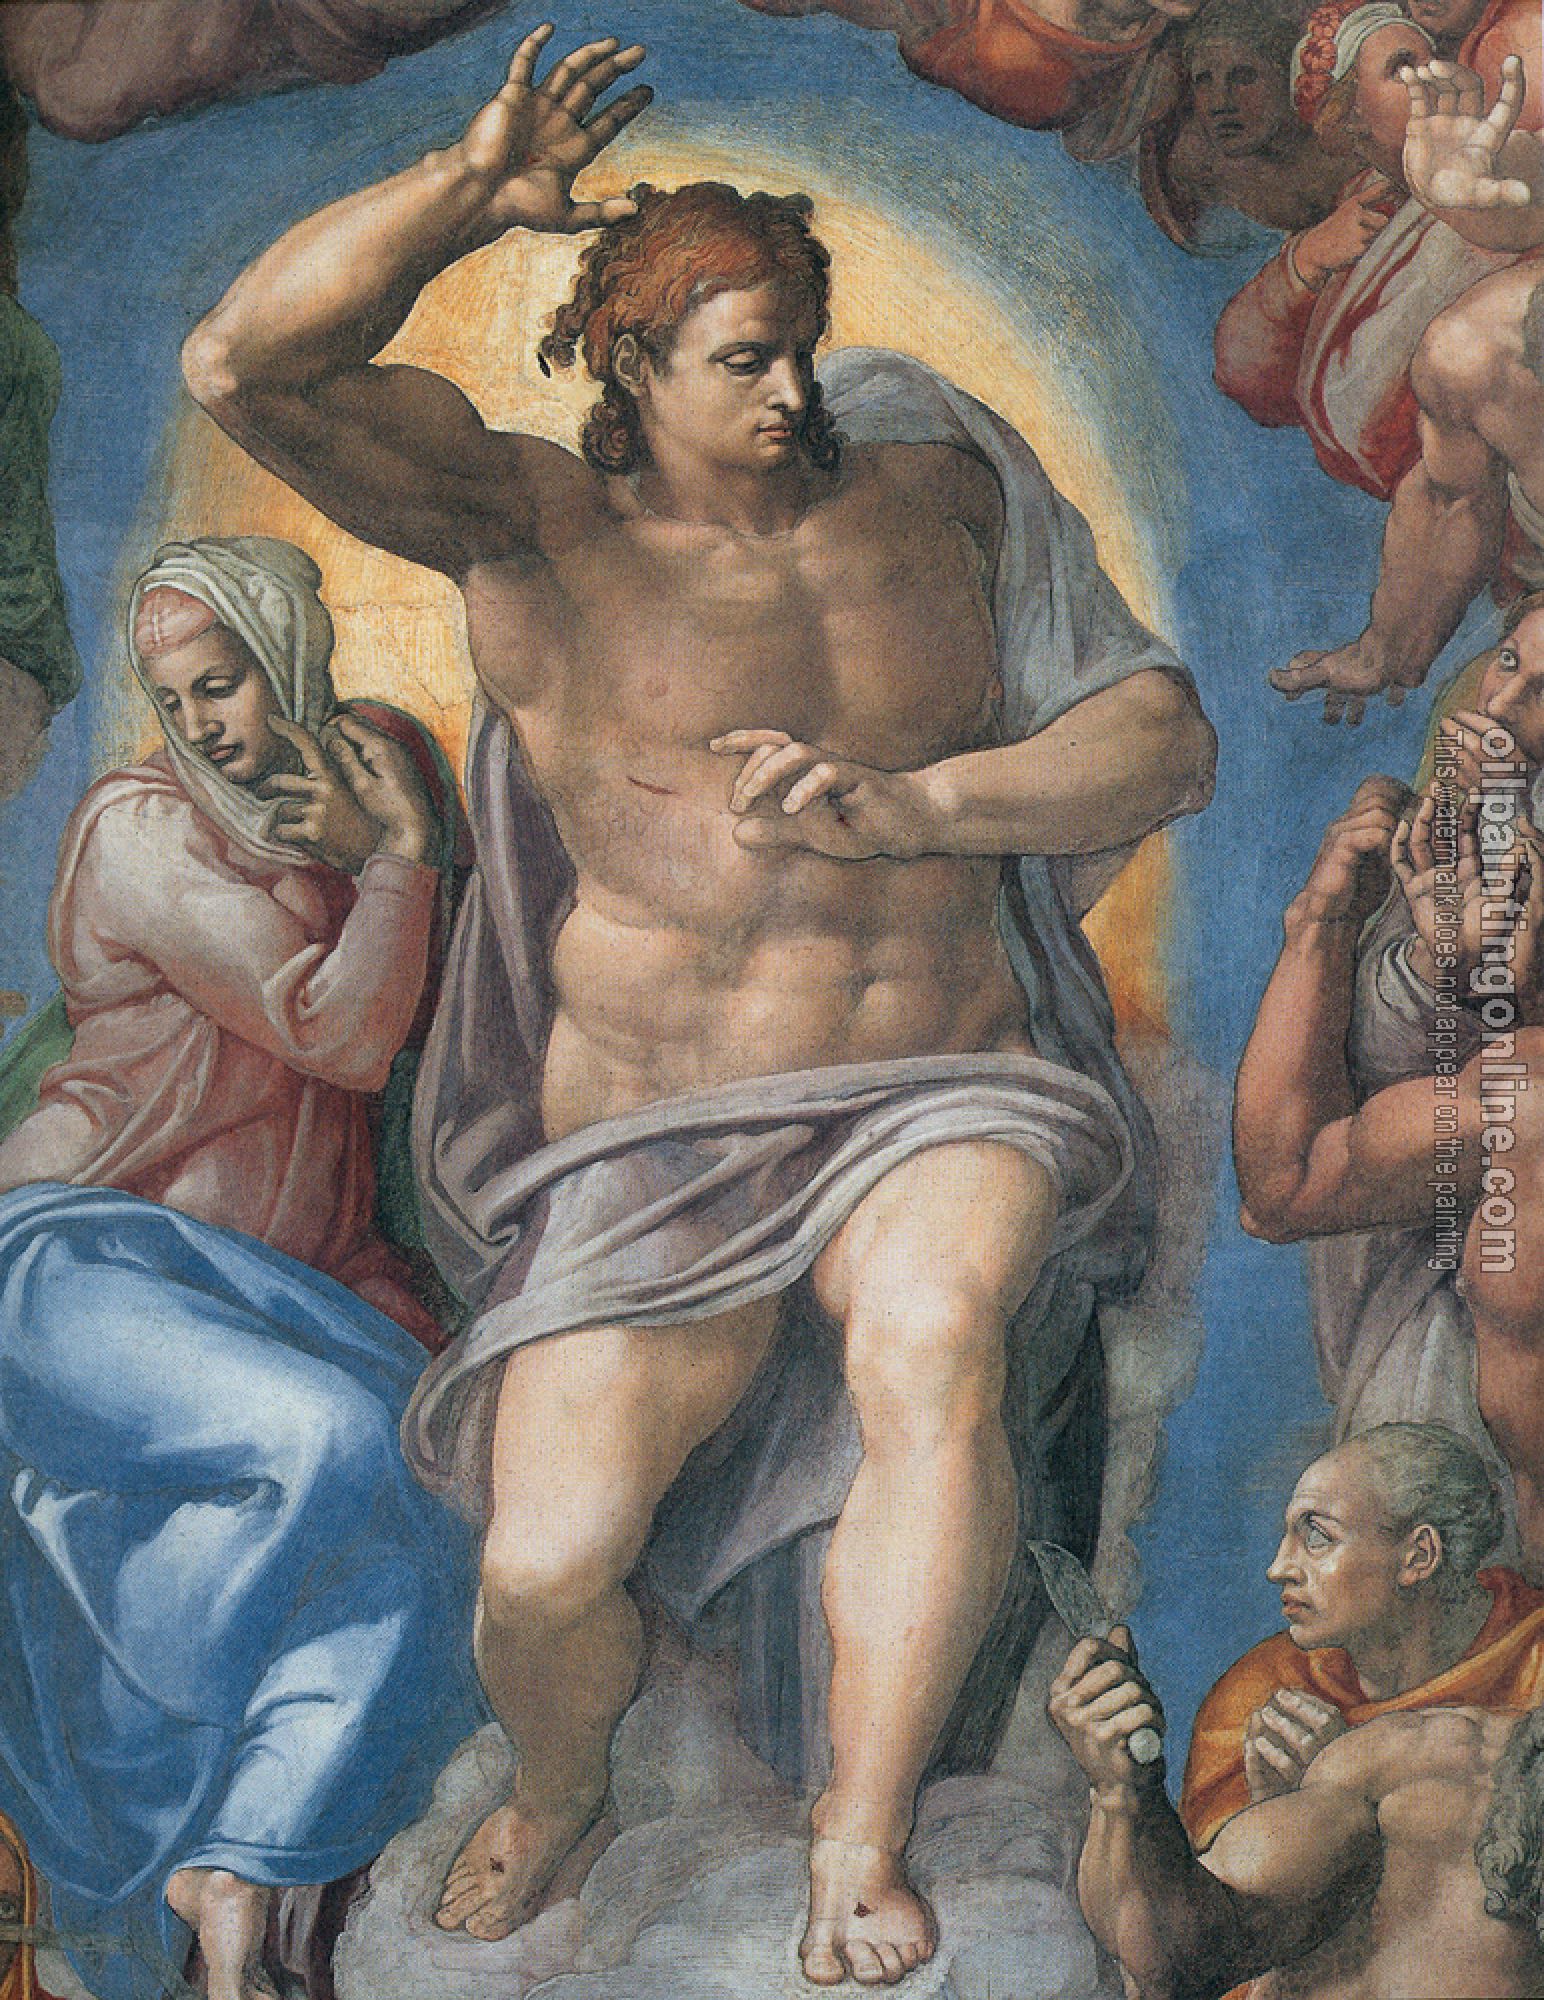 Michelangelo - The Last Judgement, Christ the Judge